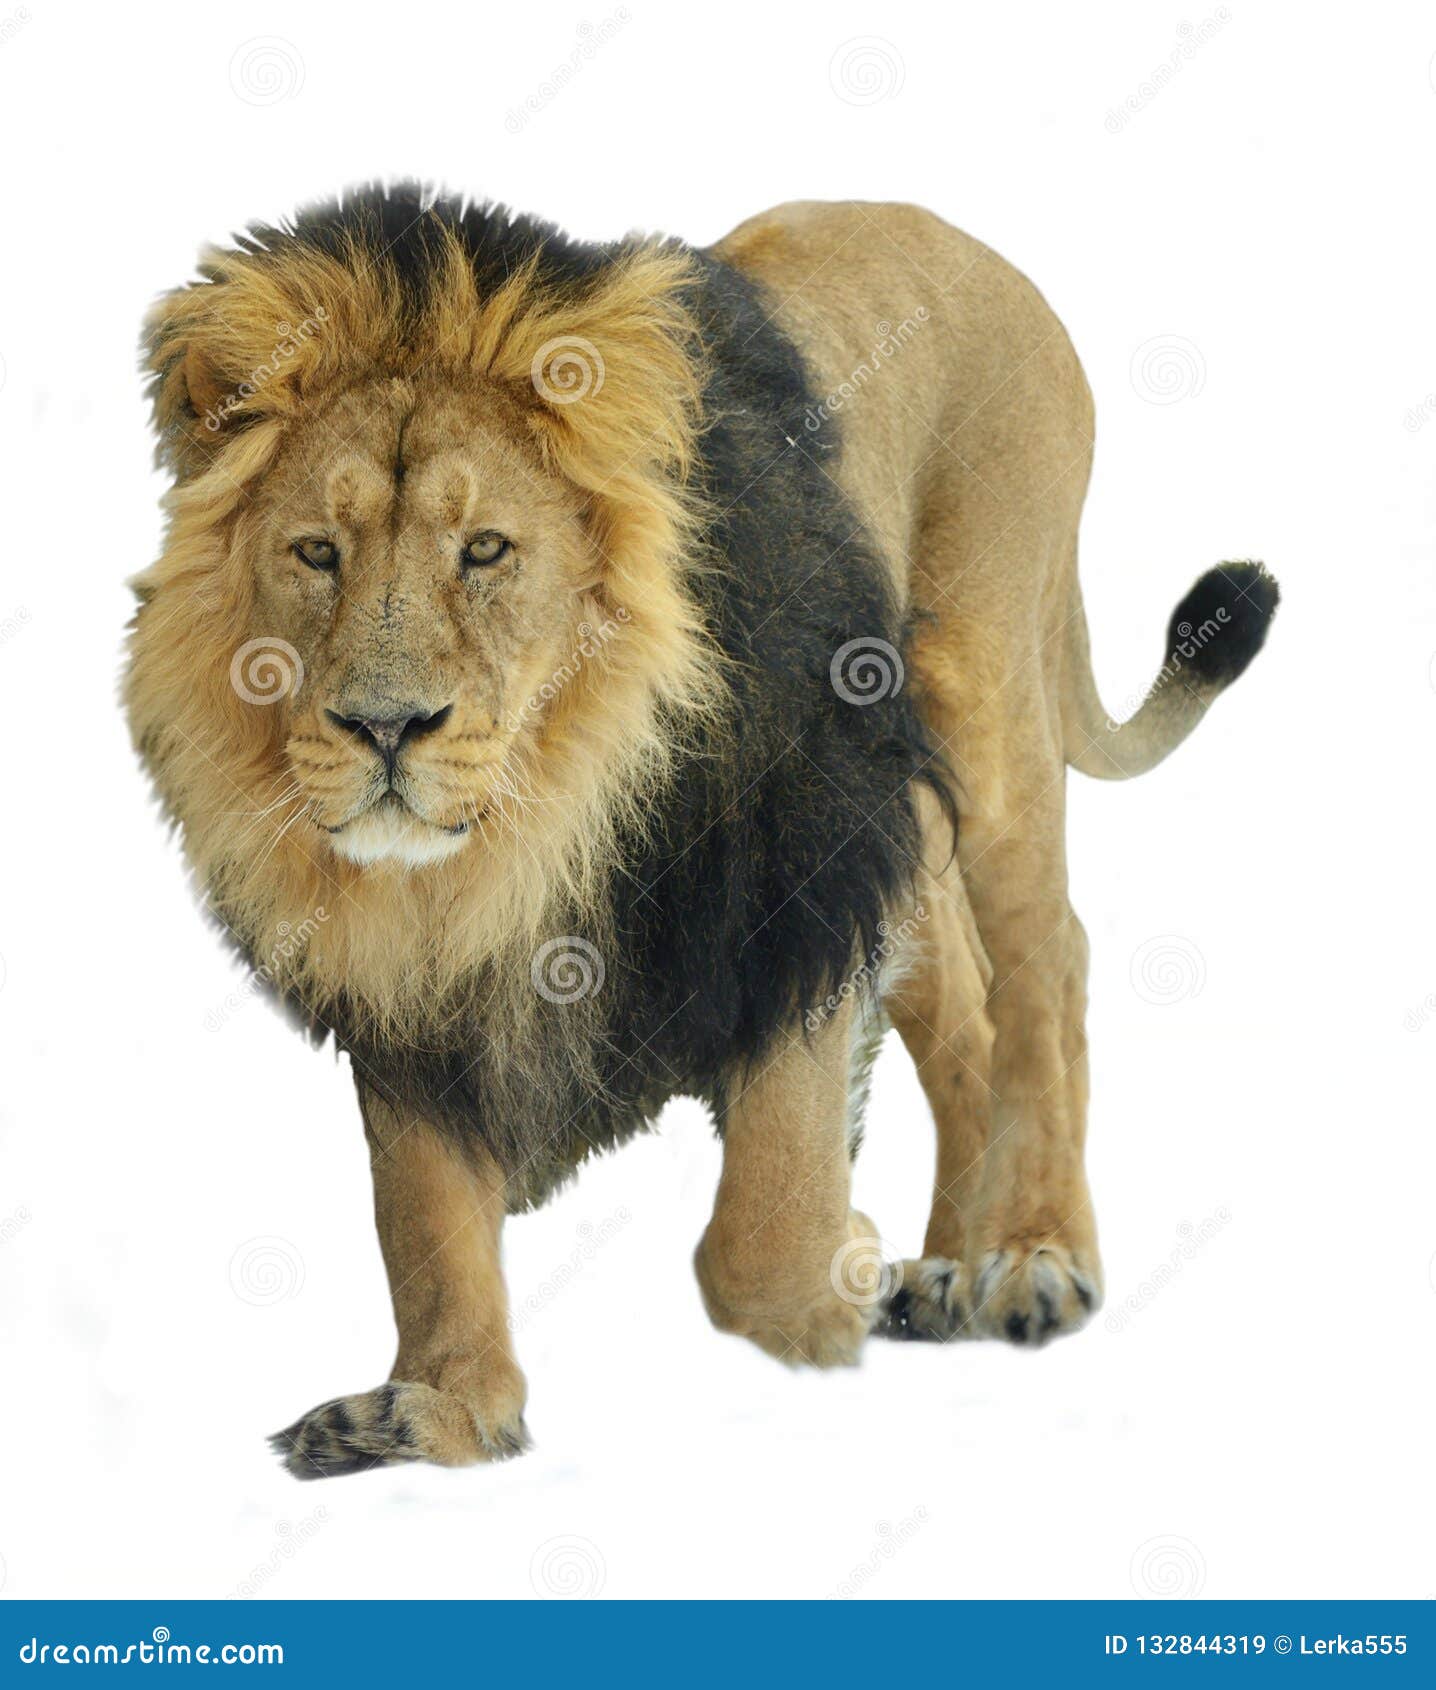 Premium Photo  Lion panthera leo on a white isolated